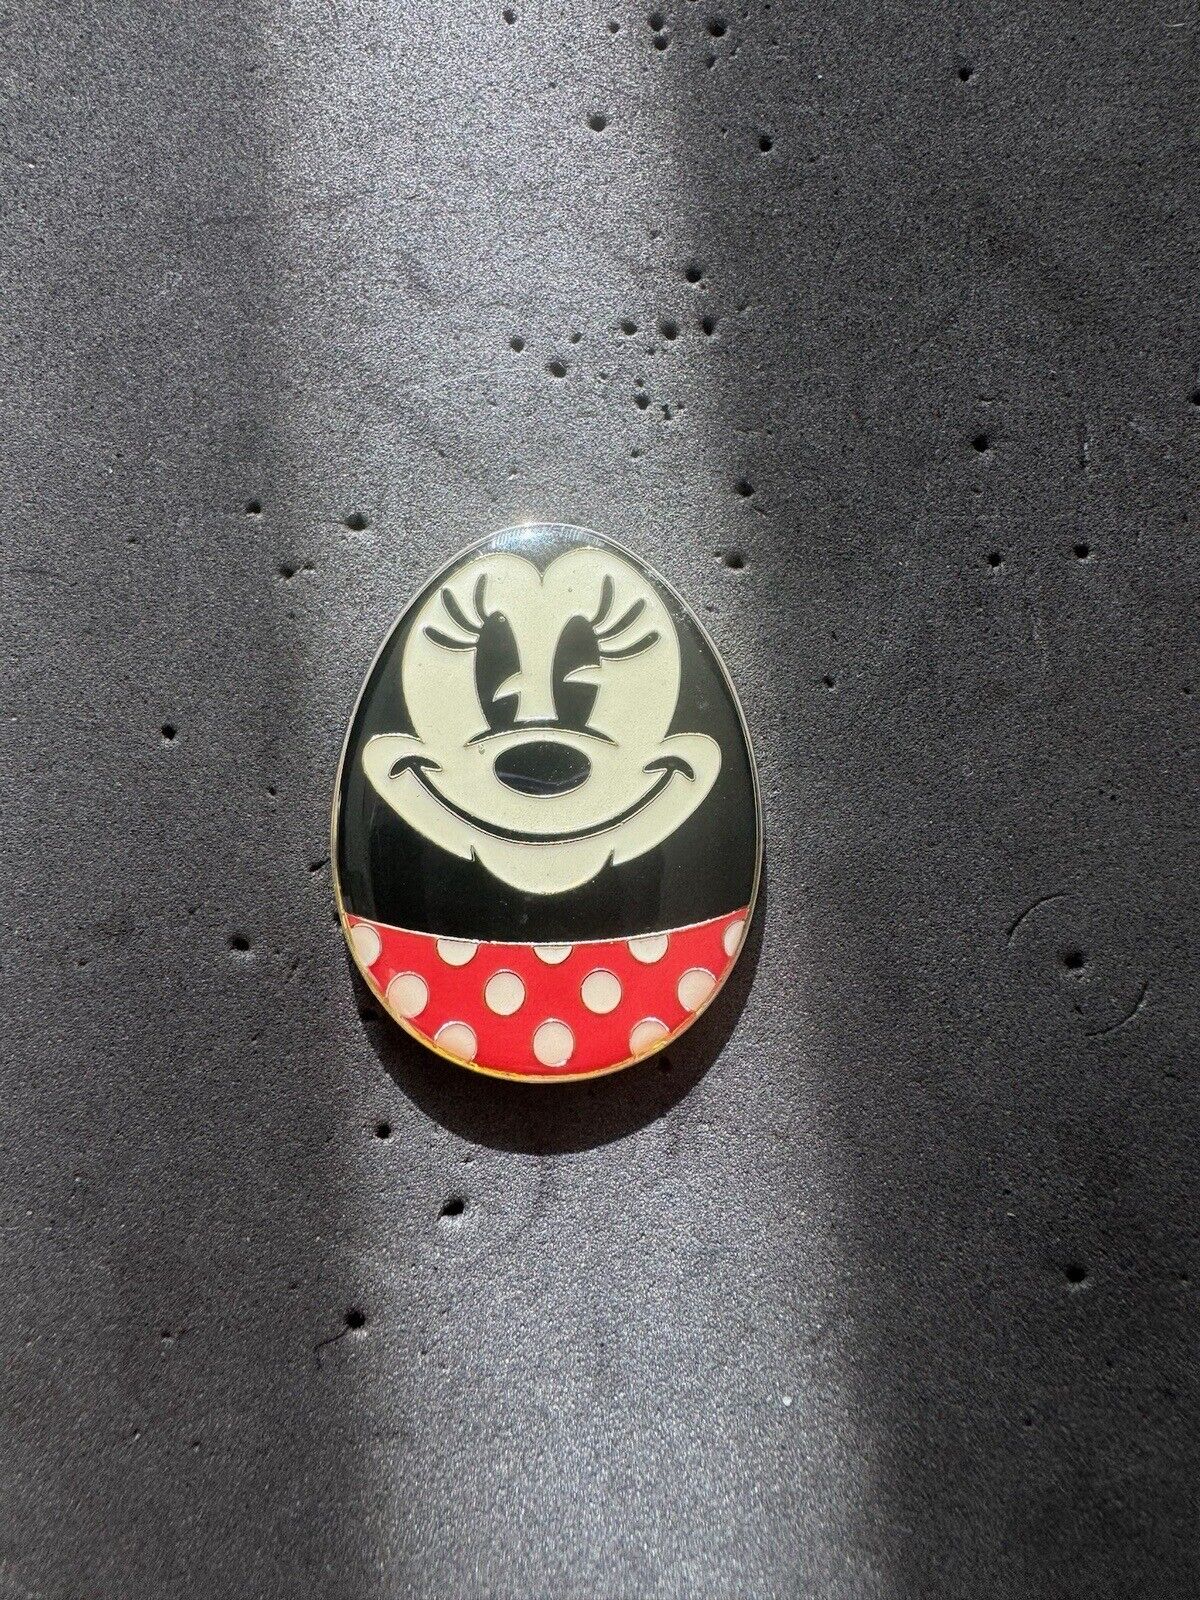 HKDL 2019 Magic Access Exclusive Egg Mickey Disney Pin B2